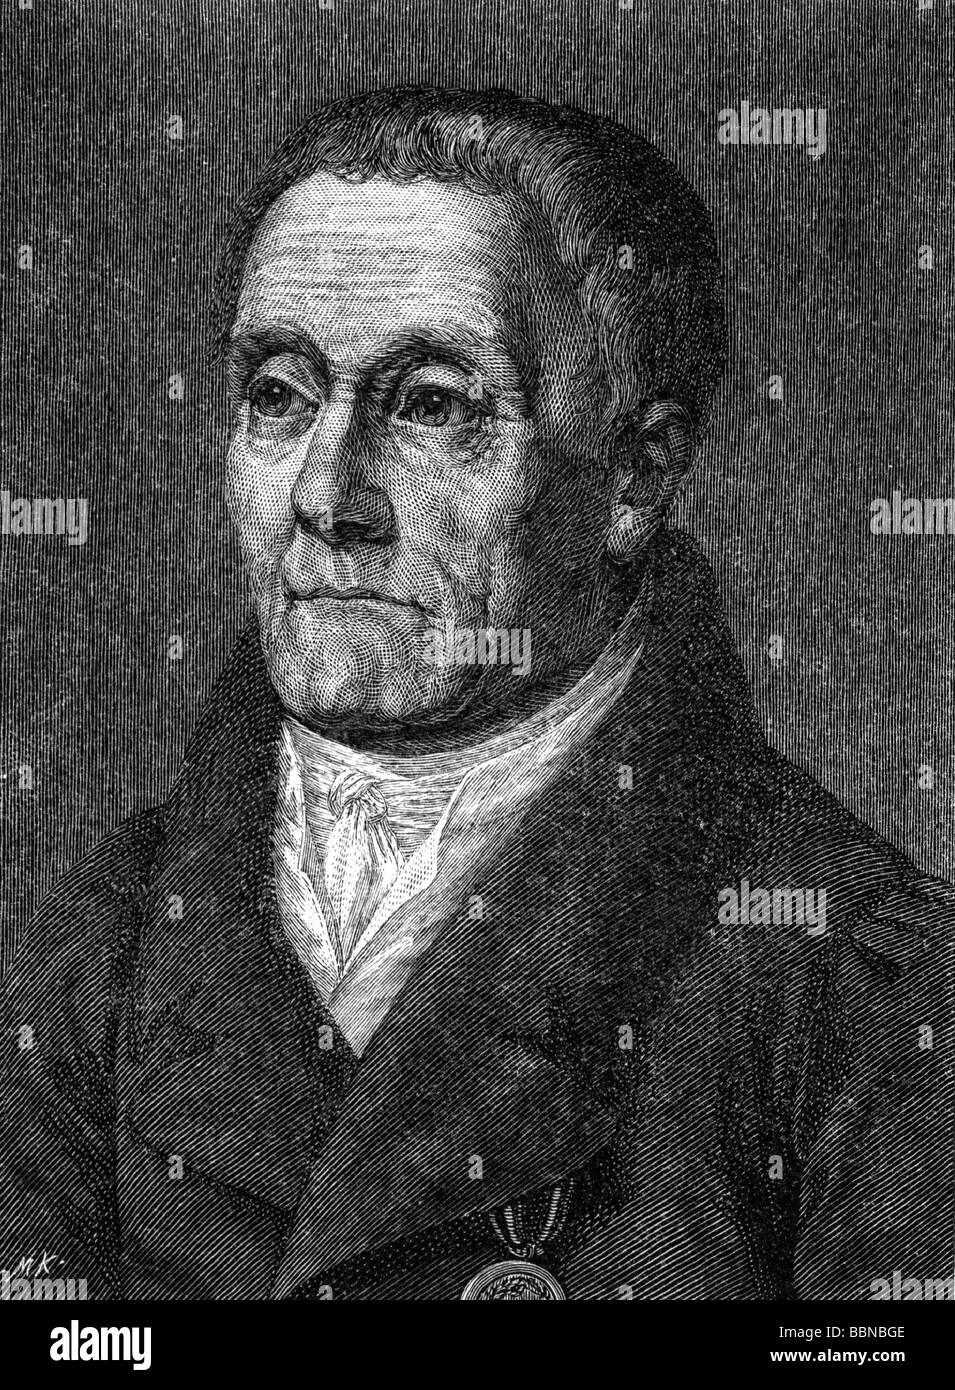 Nettelbeck, Joachim, 20.9.1738 - 29.1.1824, Prussian officer, portrait, wood engraving, 19th century, , Stock Photo